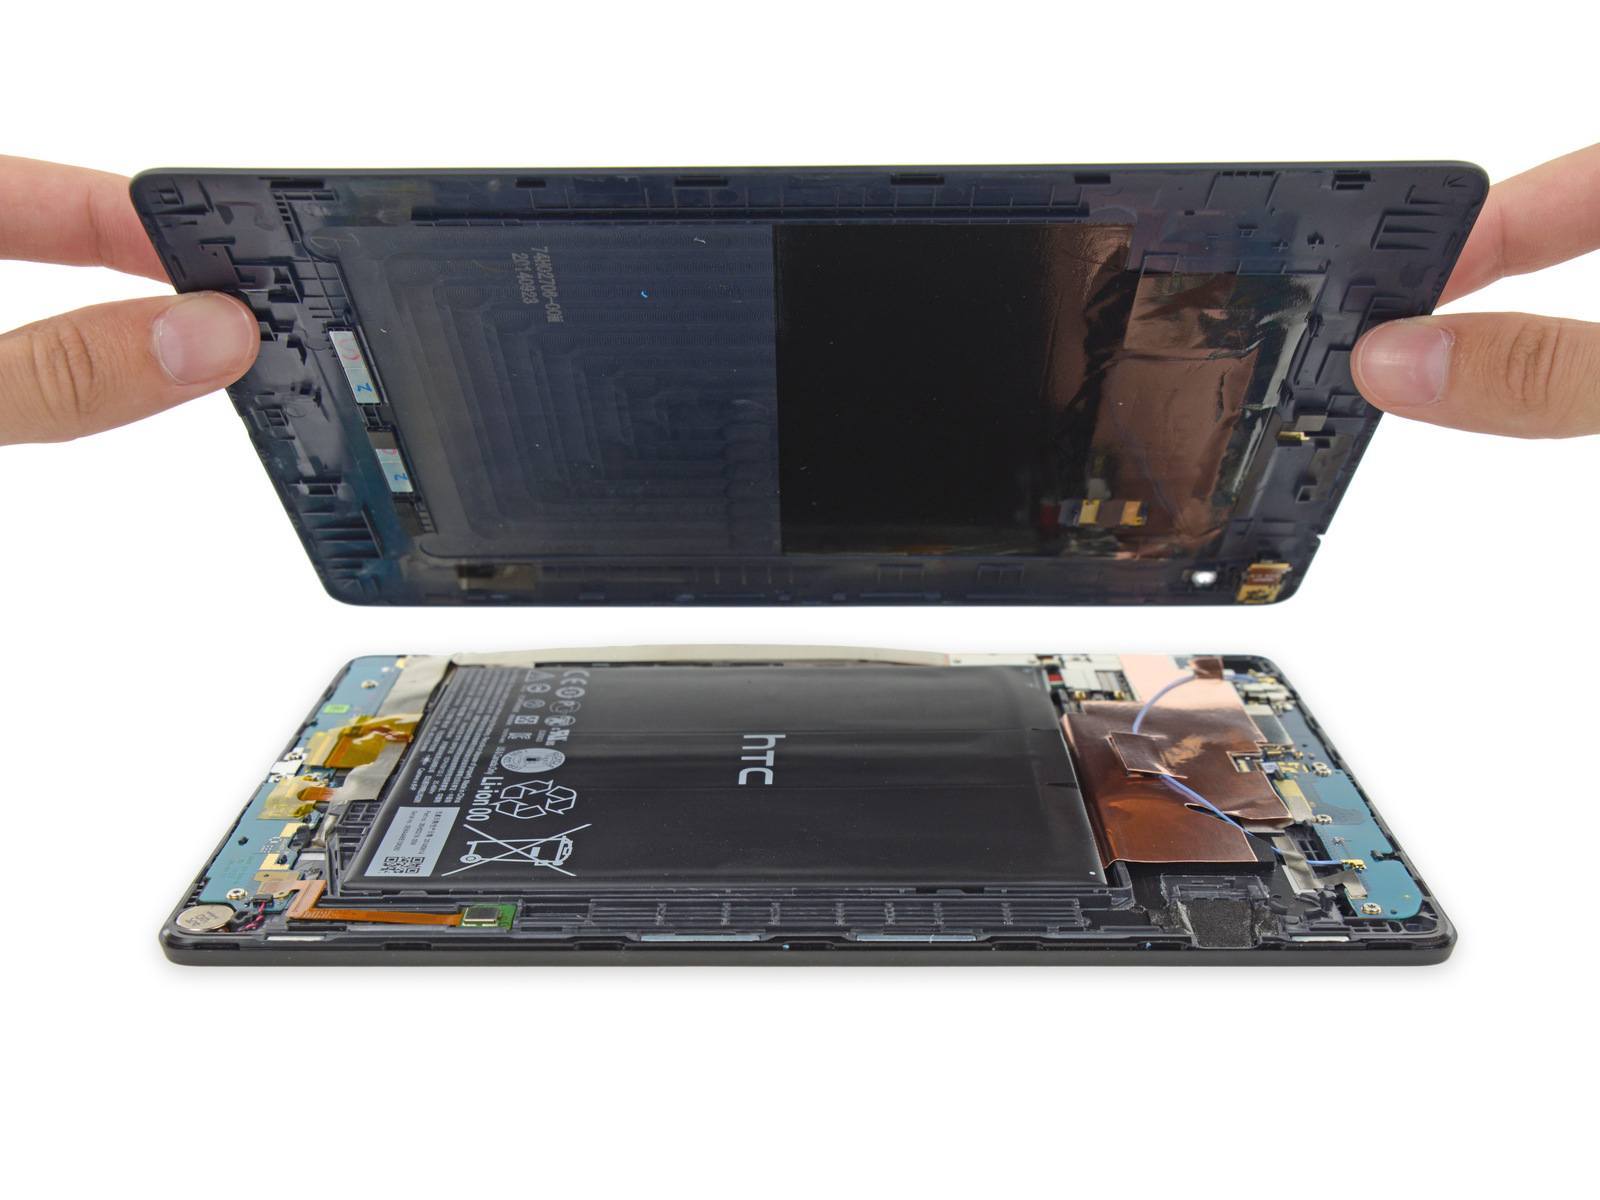 Nexus 9 insides